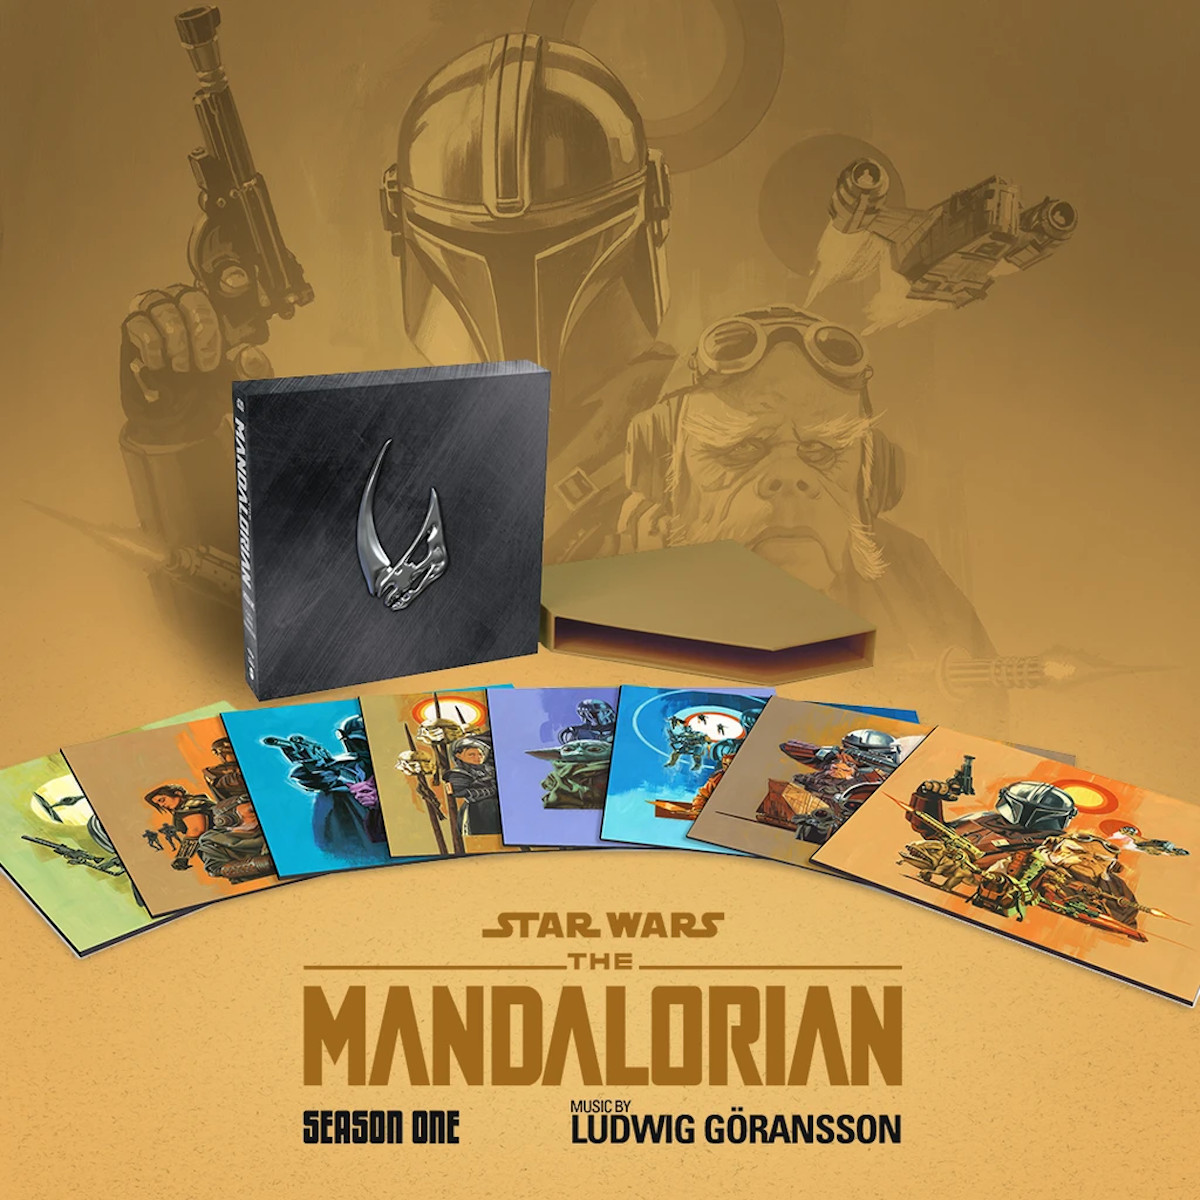 The Mandalorian Season 1 Box Set